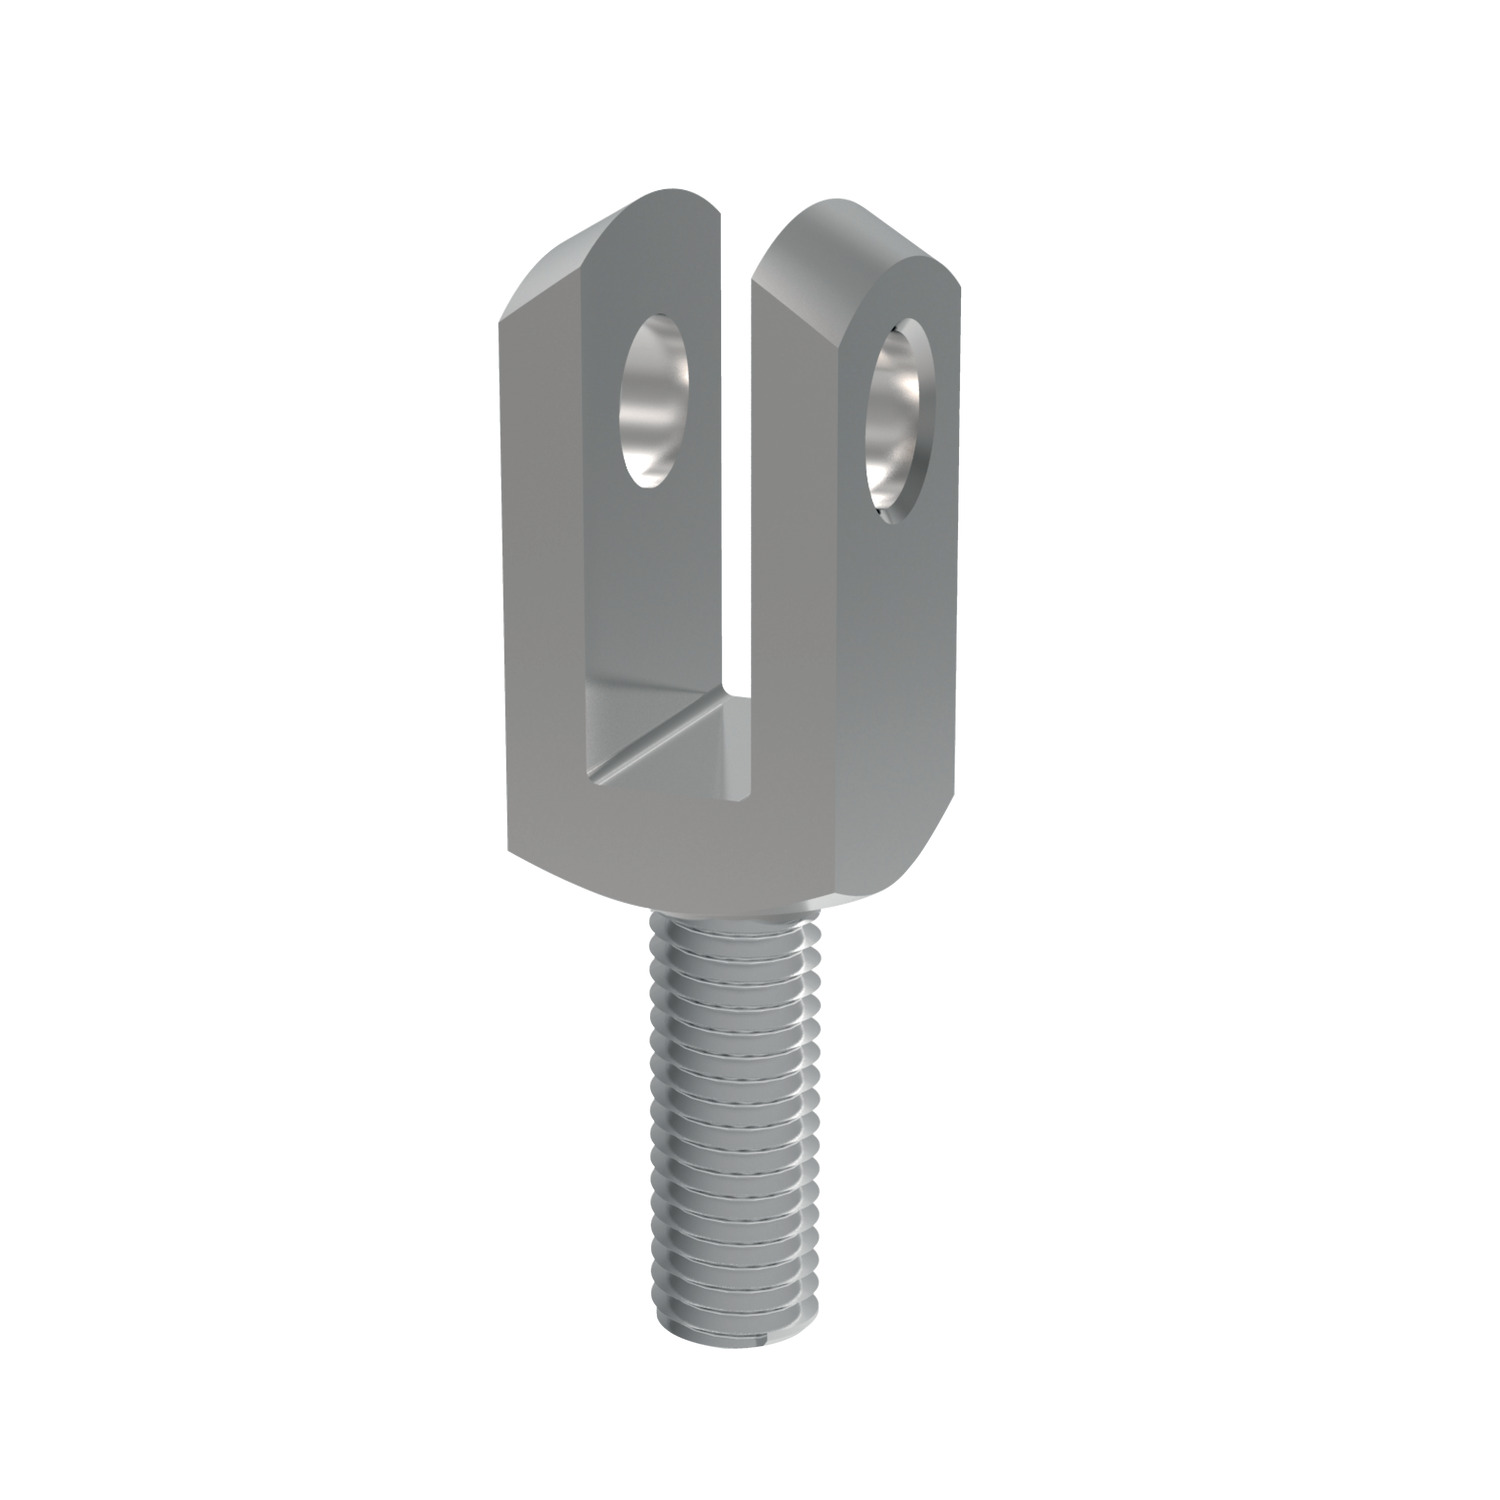 65641.W0006 Male Clevis Joints - Zinc plated steel. 